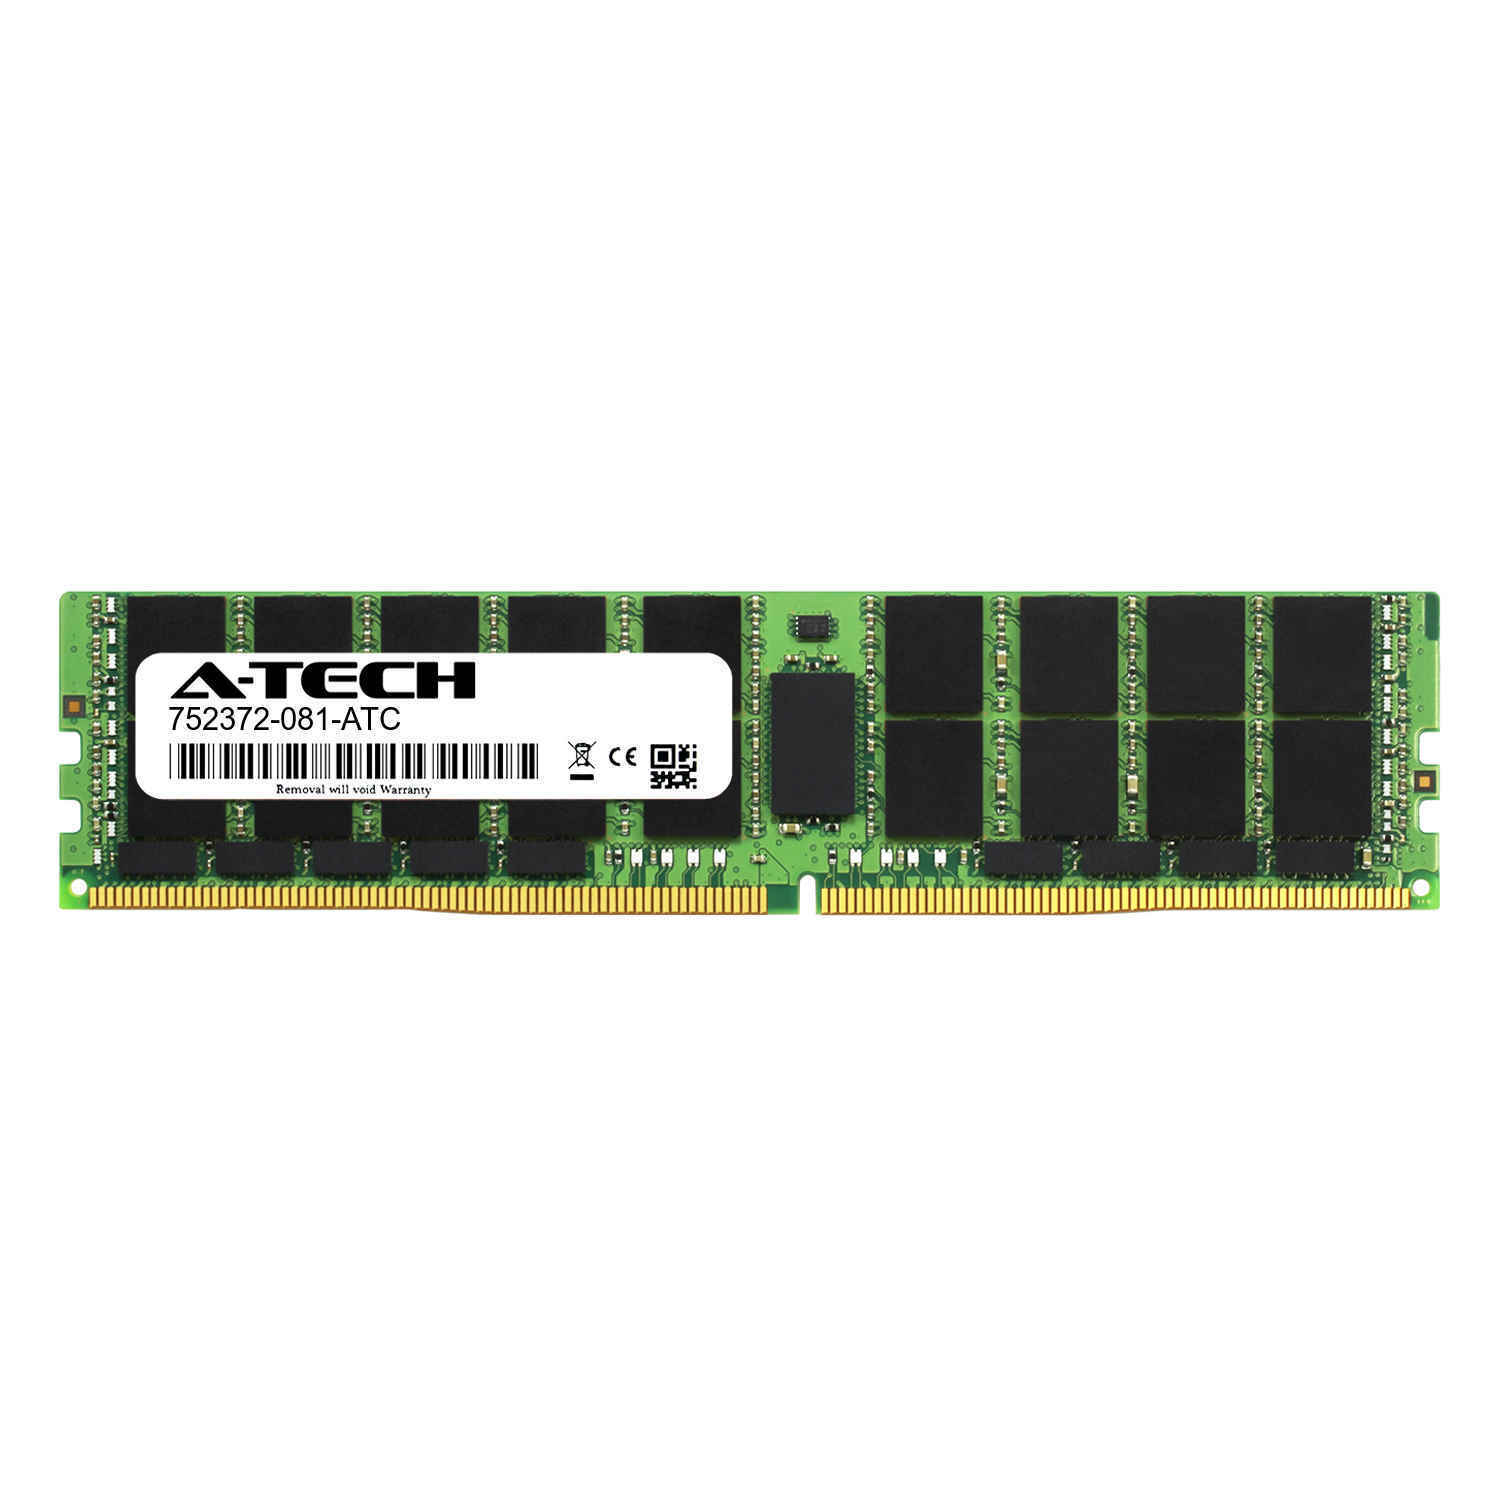 32GB DDR4 2133MHz PC4-17000L LRDIMM (HP 752372-081 Equivalent) Server Memory RAM